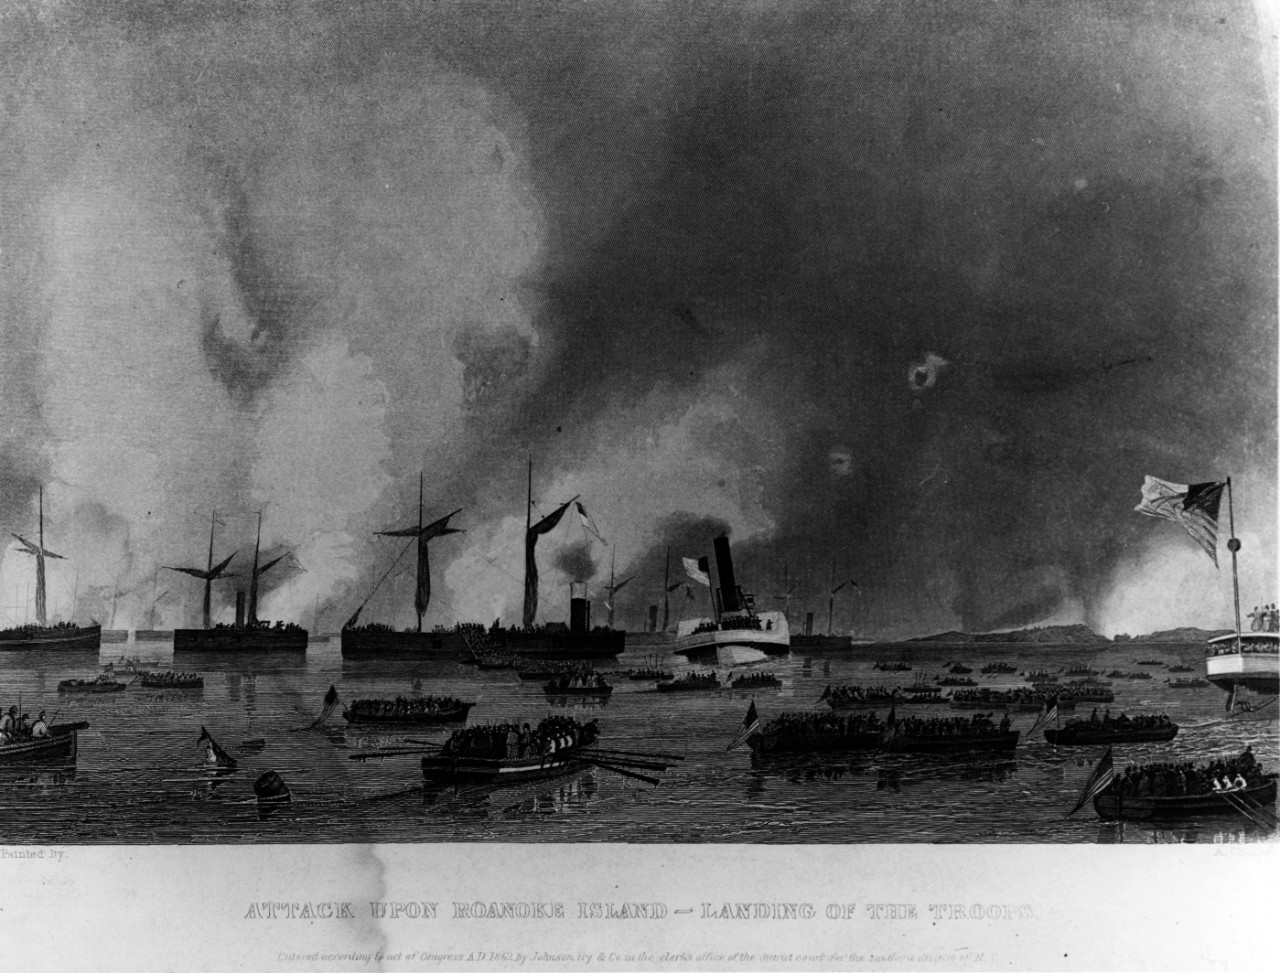 Roanoke Island Operation, February 1862